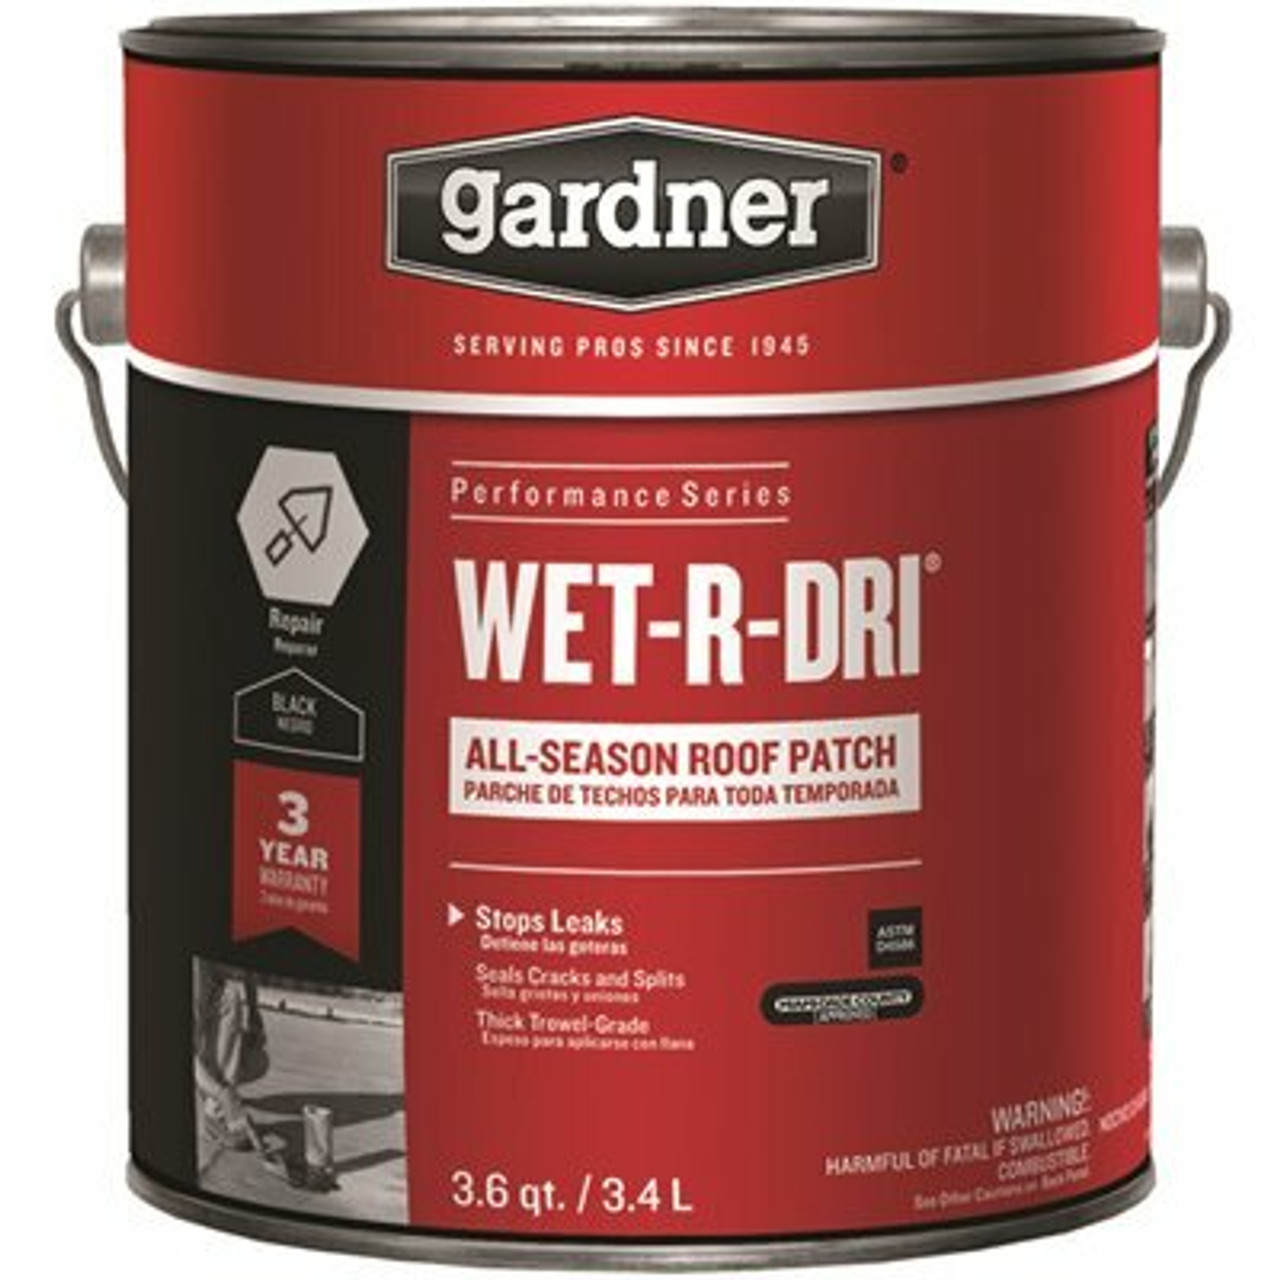 Gardner 115.2 Oz. Wet-R-Dri All-Season Roof Patch